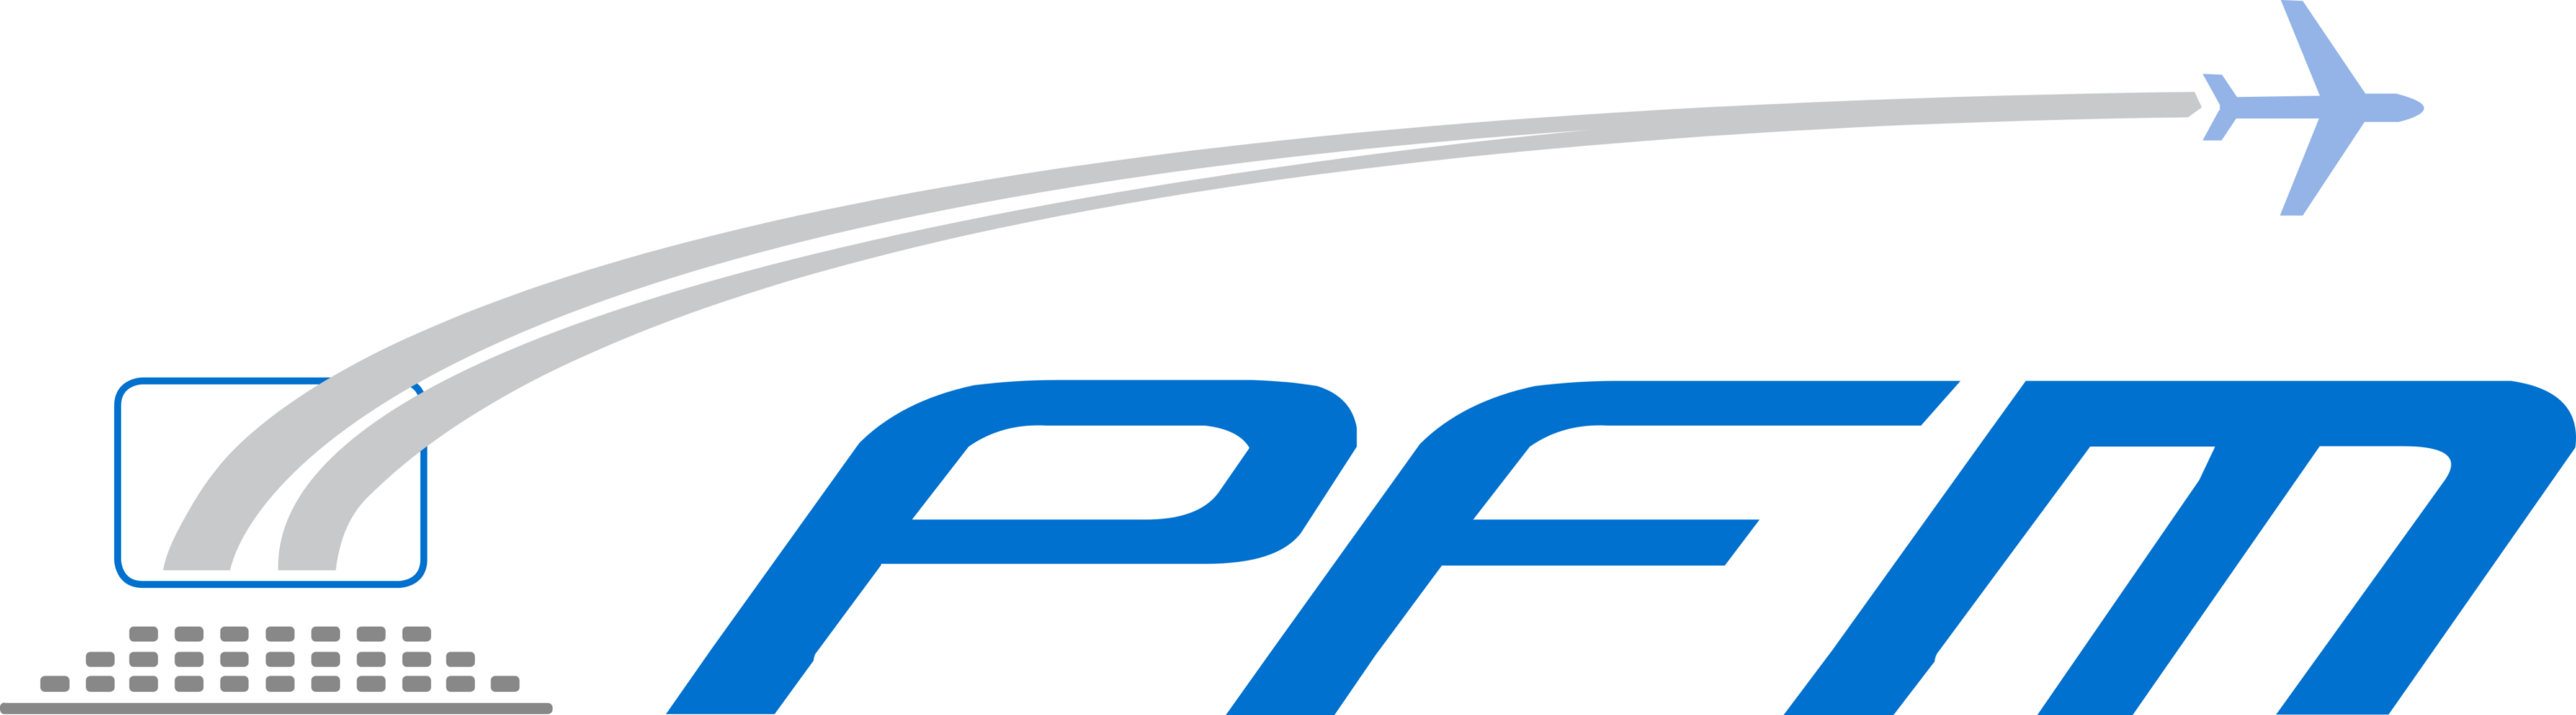 Professional Flight Management Logo